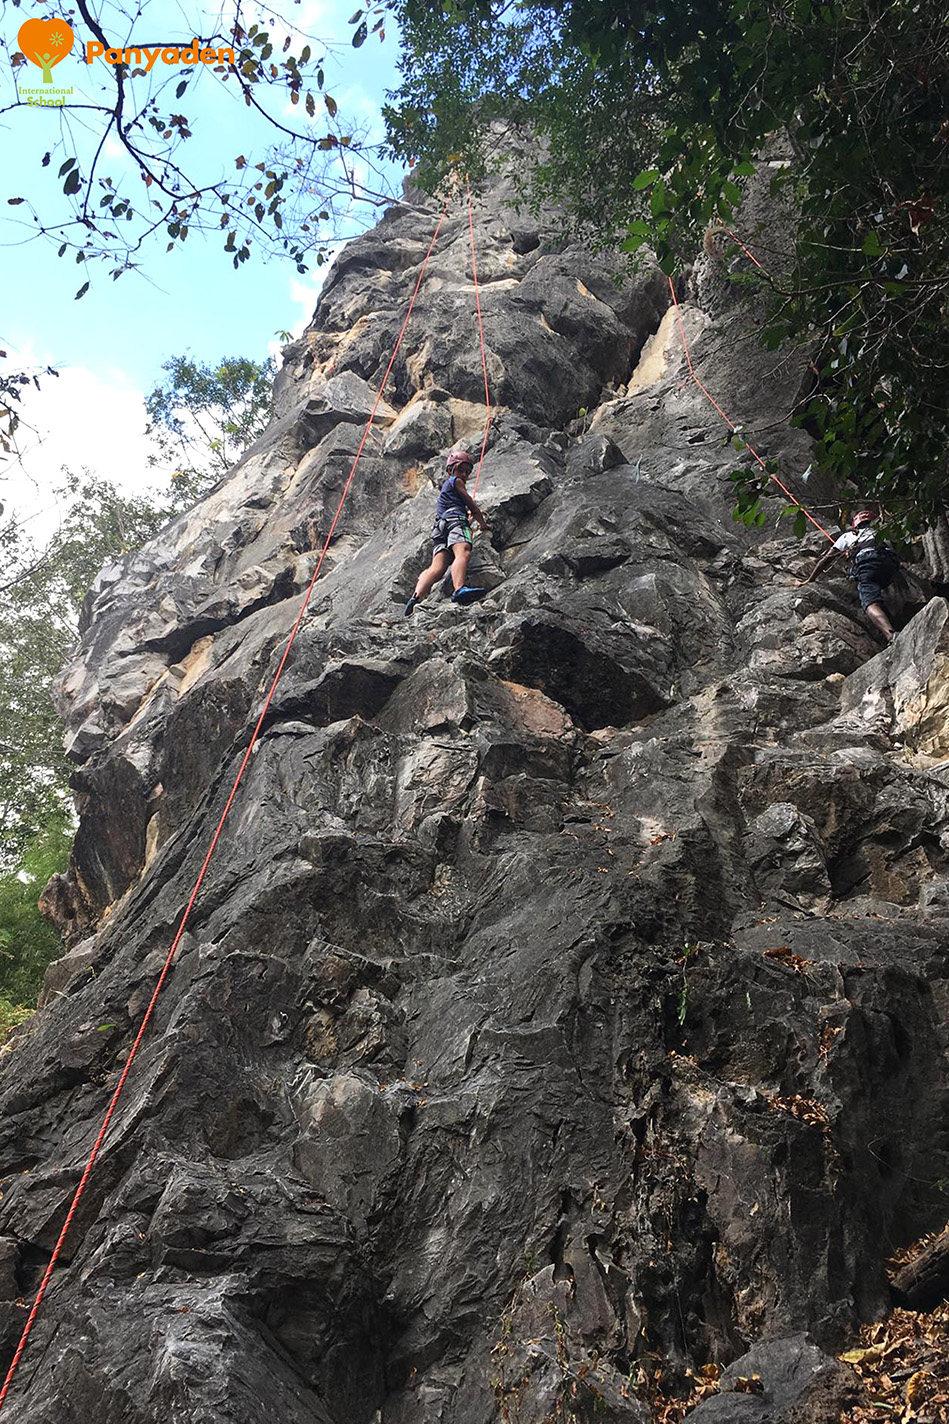 Climbing higher! Panyaden Y7 student rock climbing